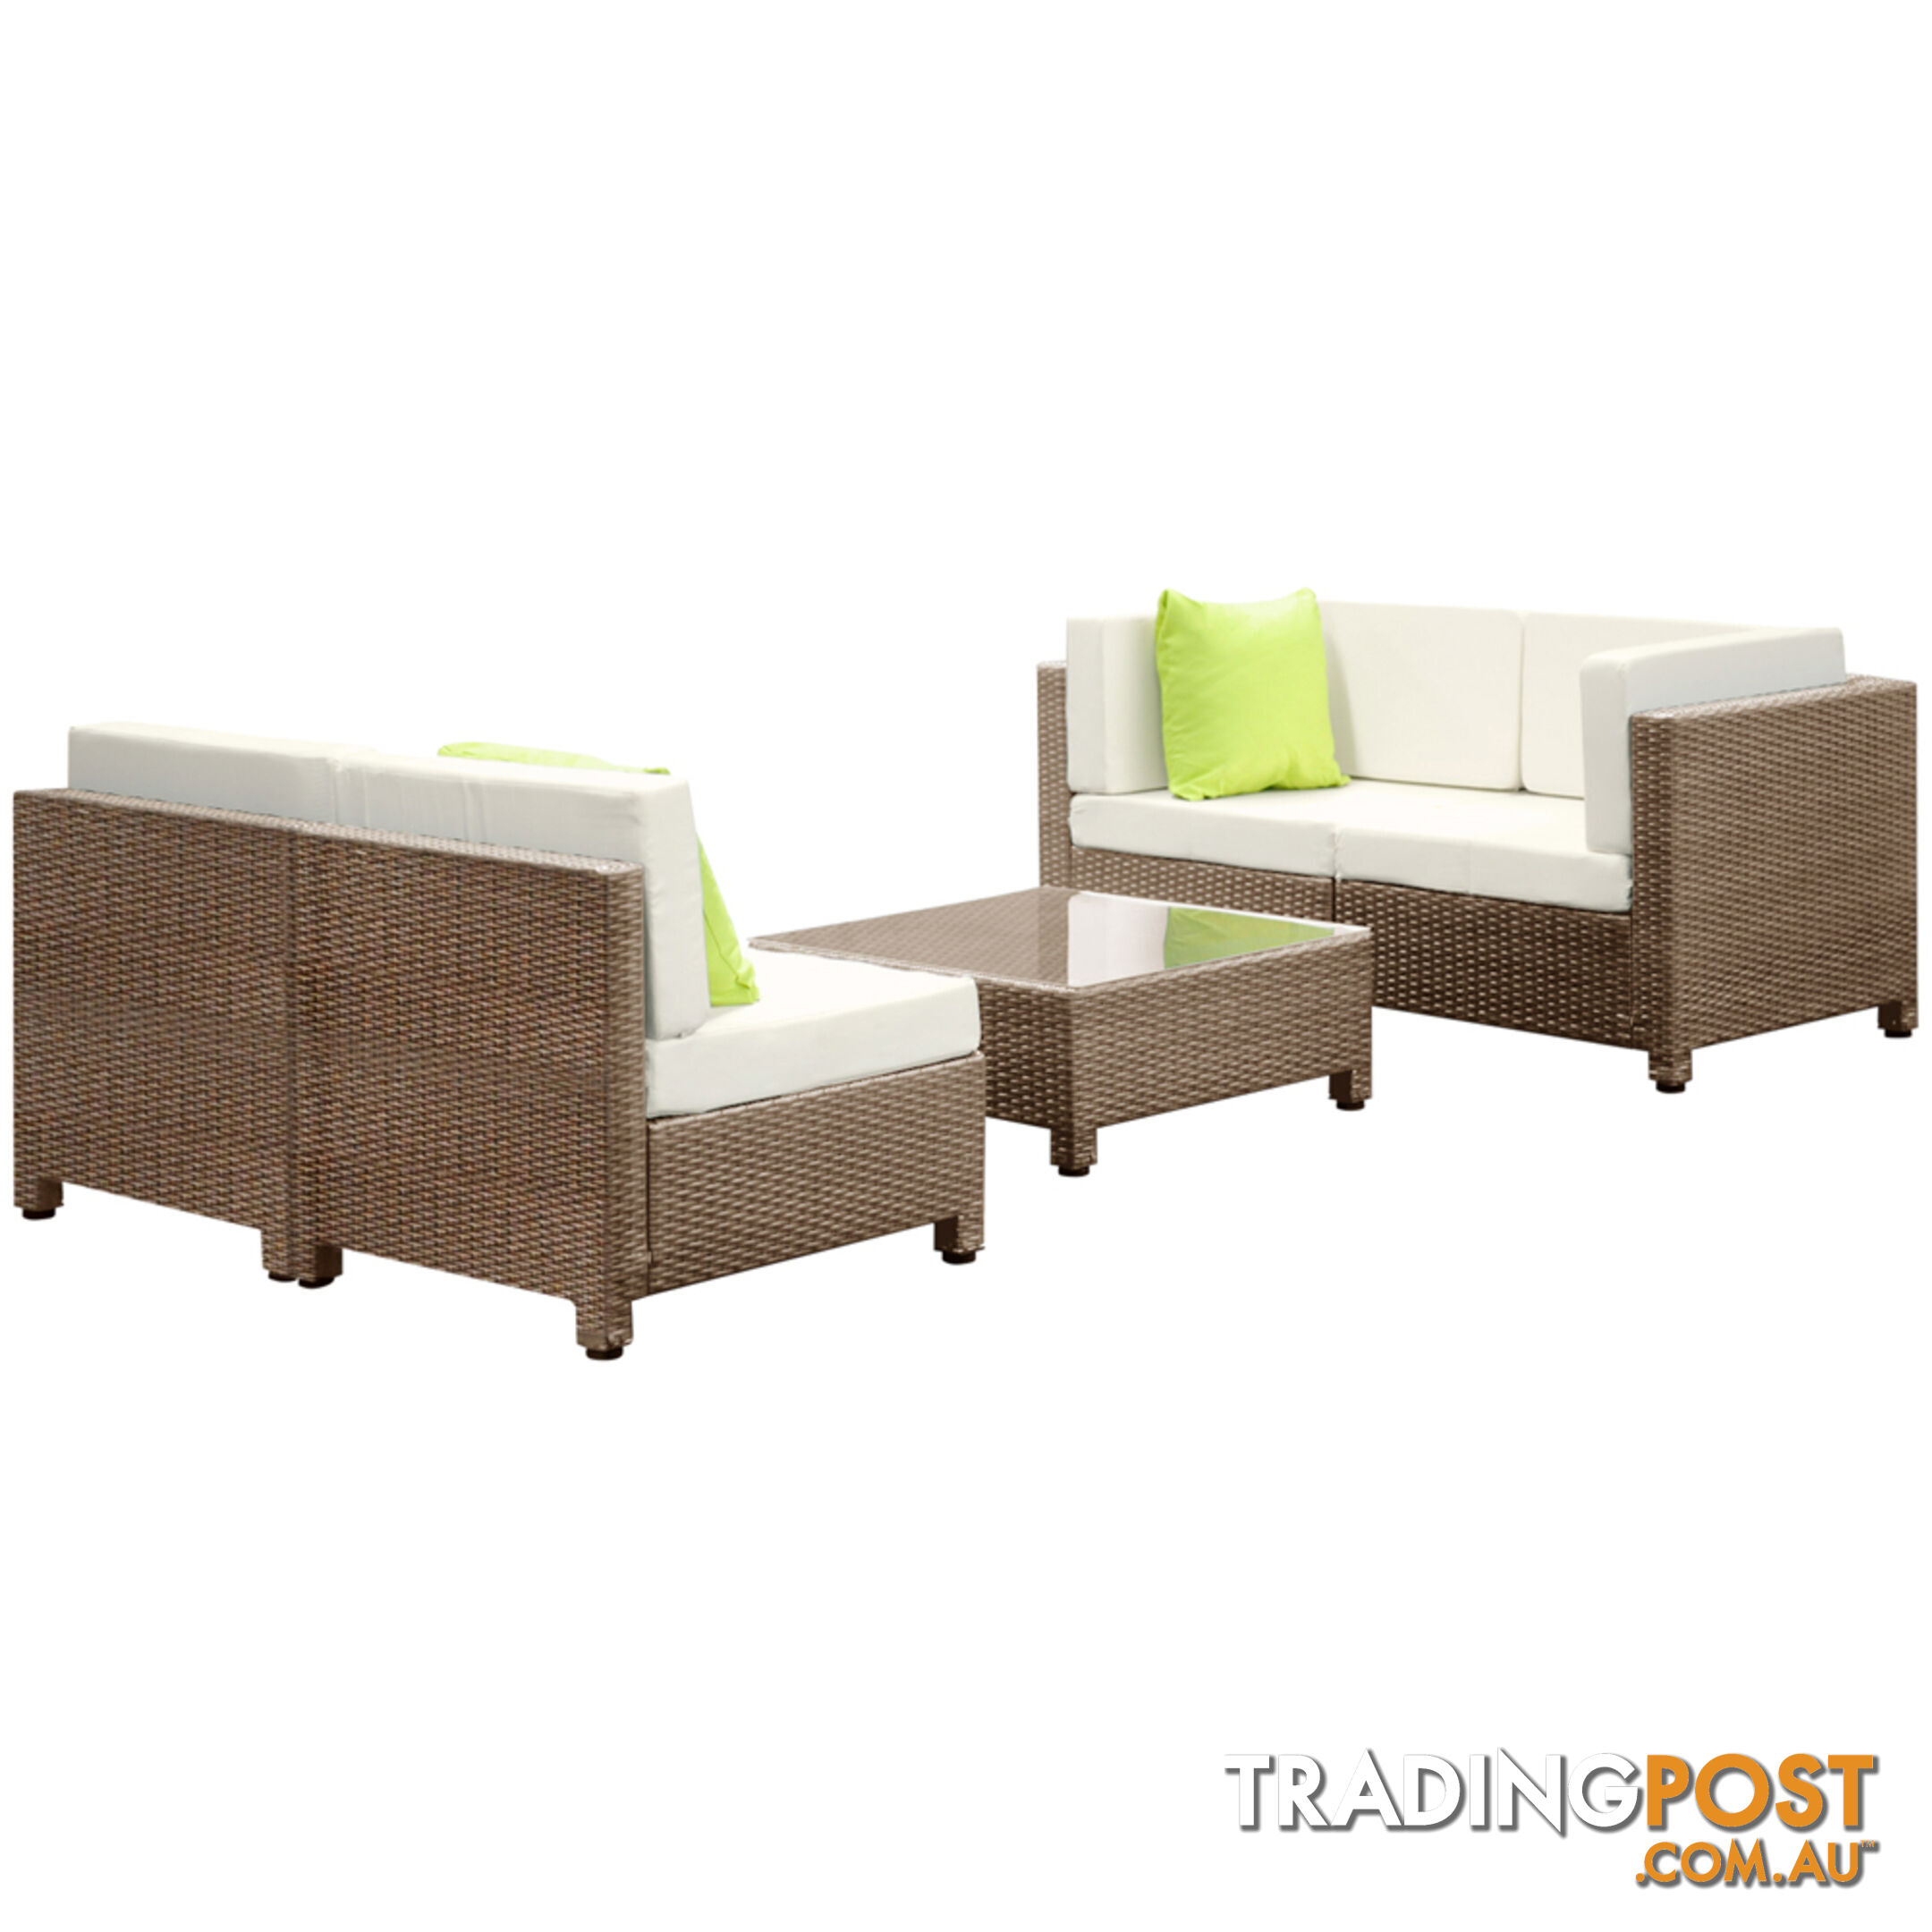 Outdoor Lounge 4 Seater Garden Furniture Wicker 5pcs Rattan Sofa Setting Beige